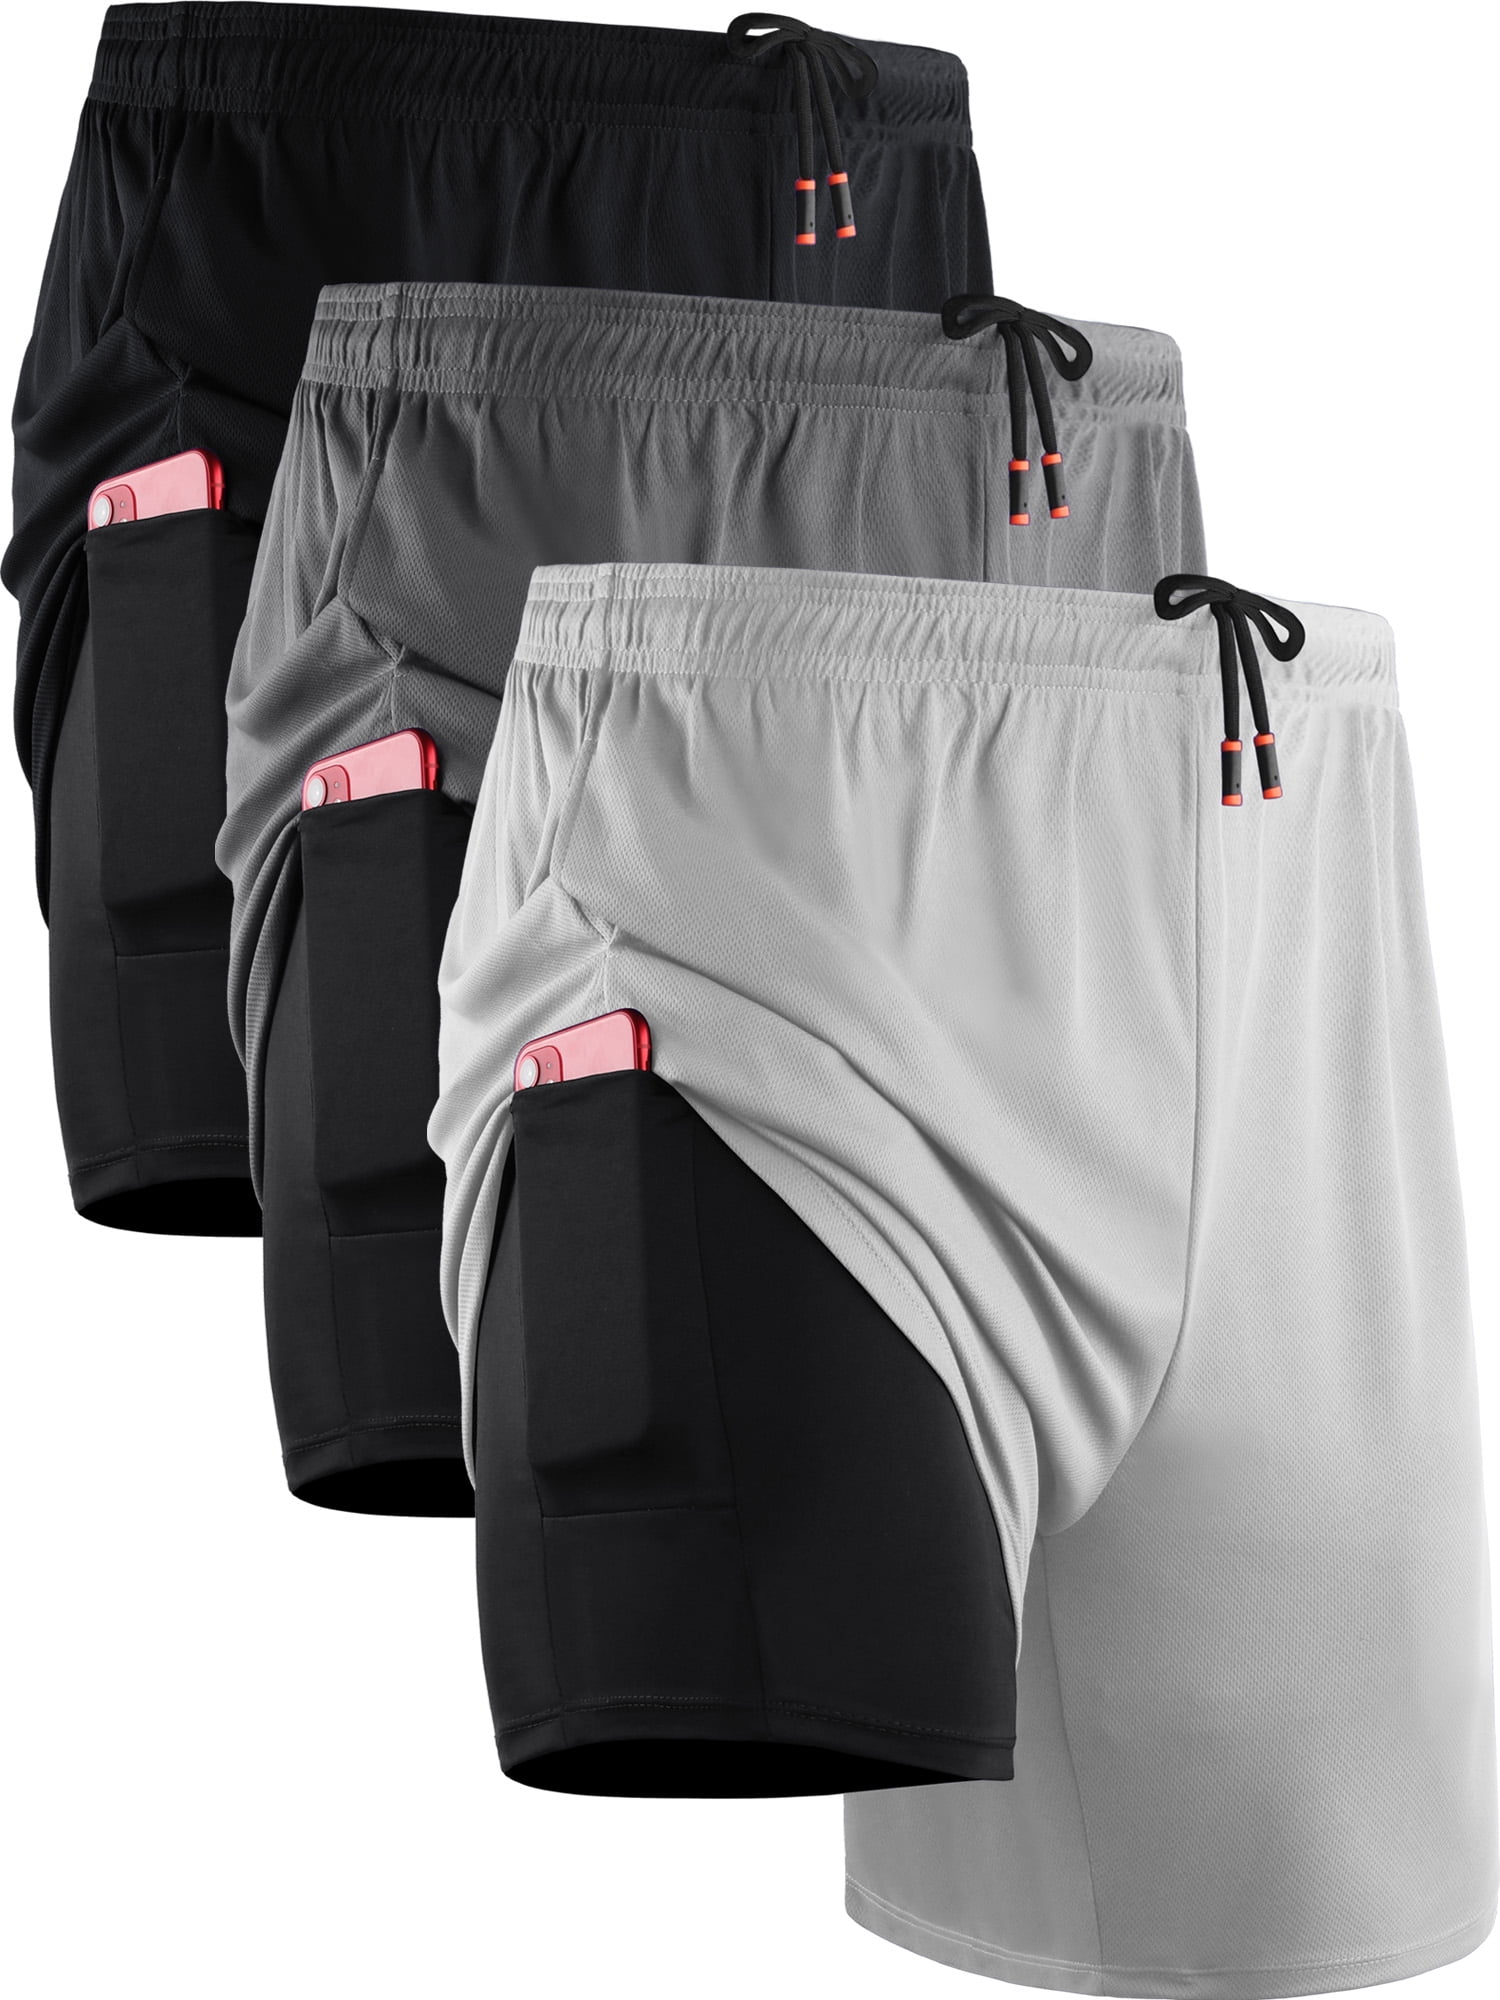 Neleus Men's Compression Shorts with Pockets 3 Pack,6064,Black